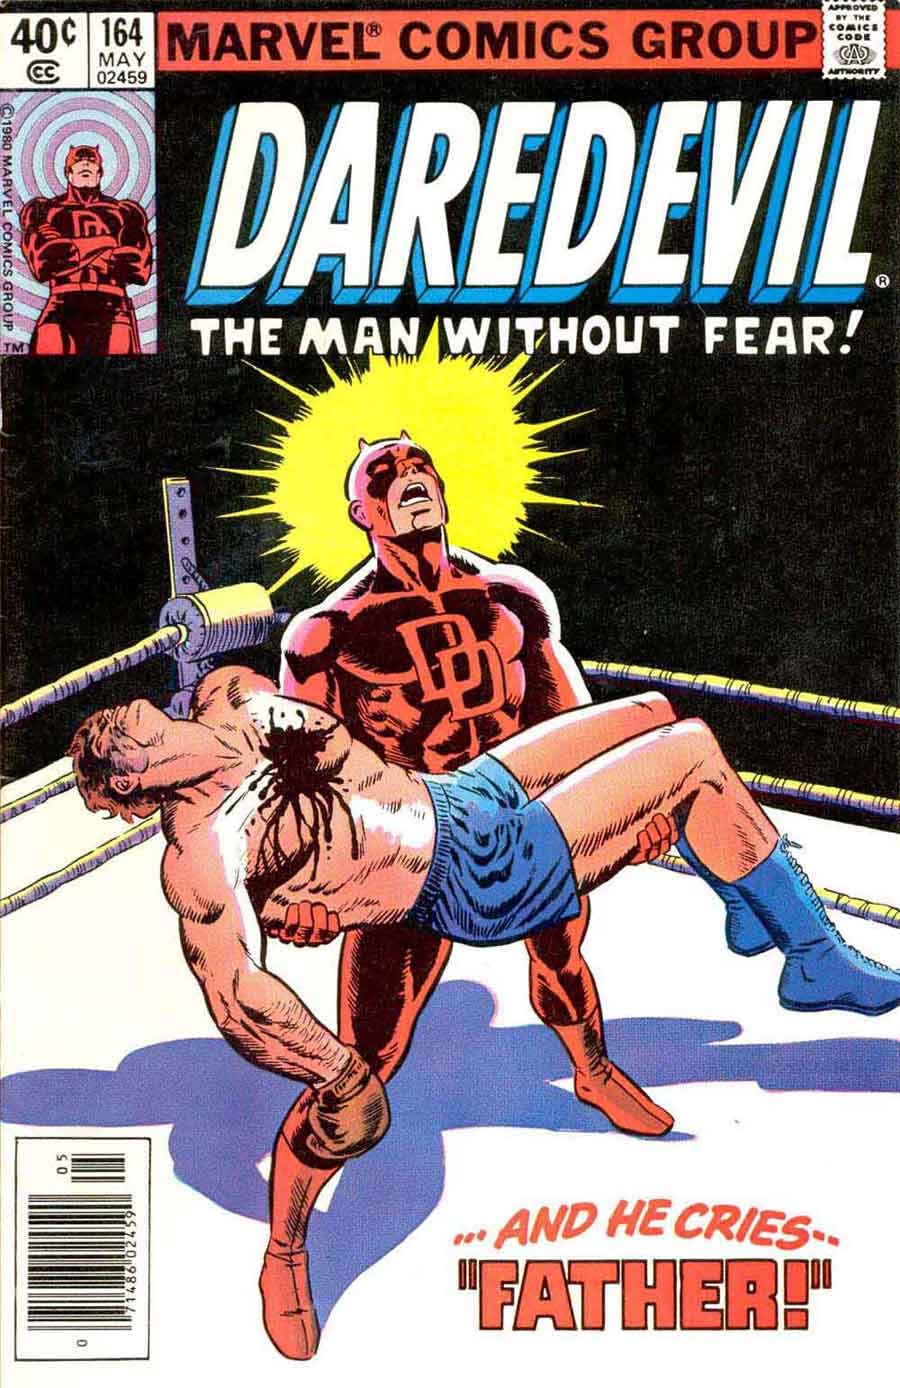 Daredevil v1 #164 marvel comic book cover art by Frank Miller Wally Wood